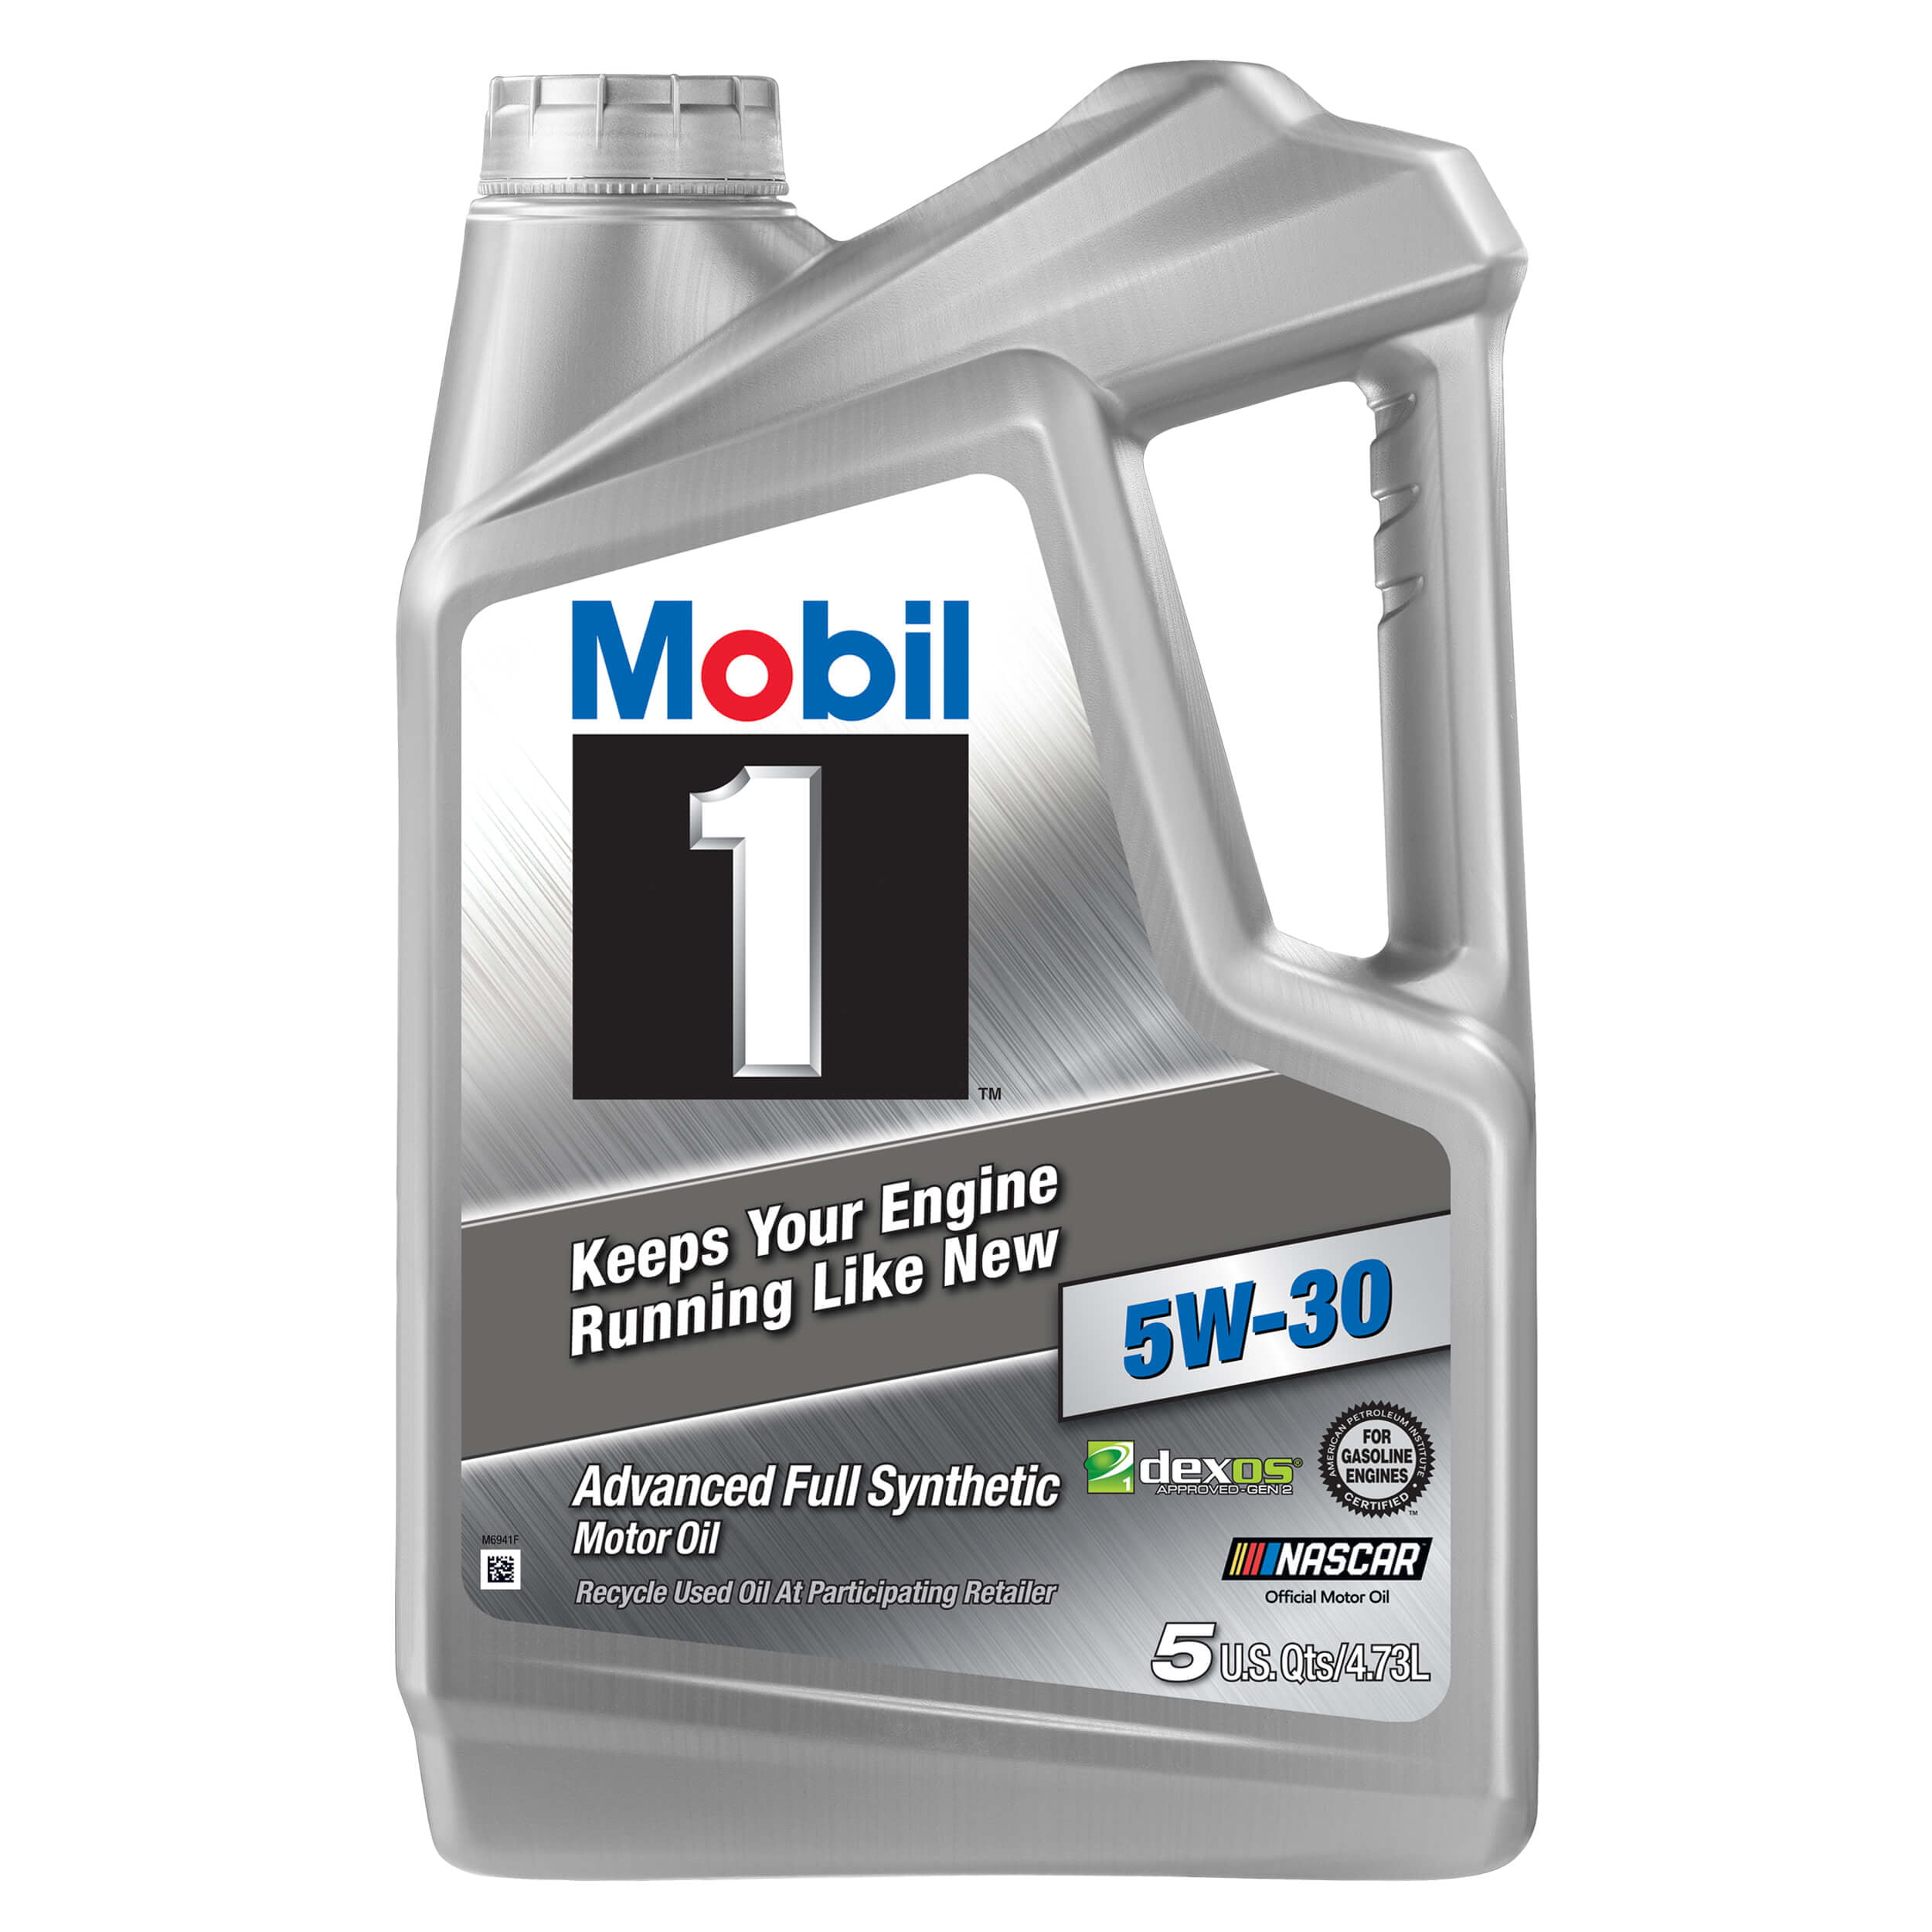 Mobil 1 Oil Filter Chart